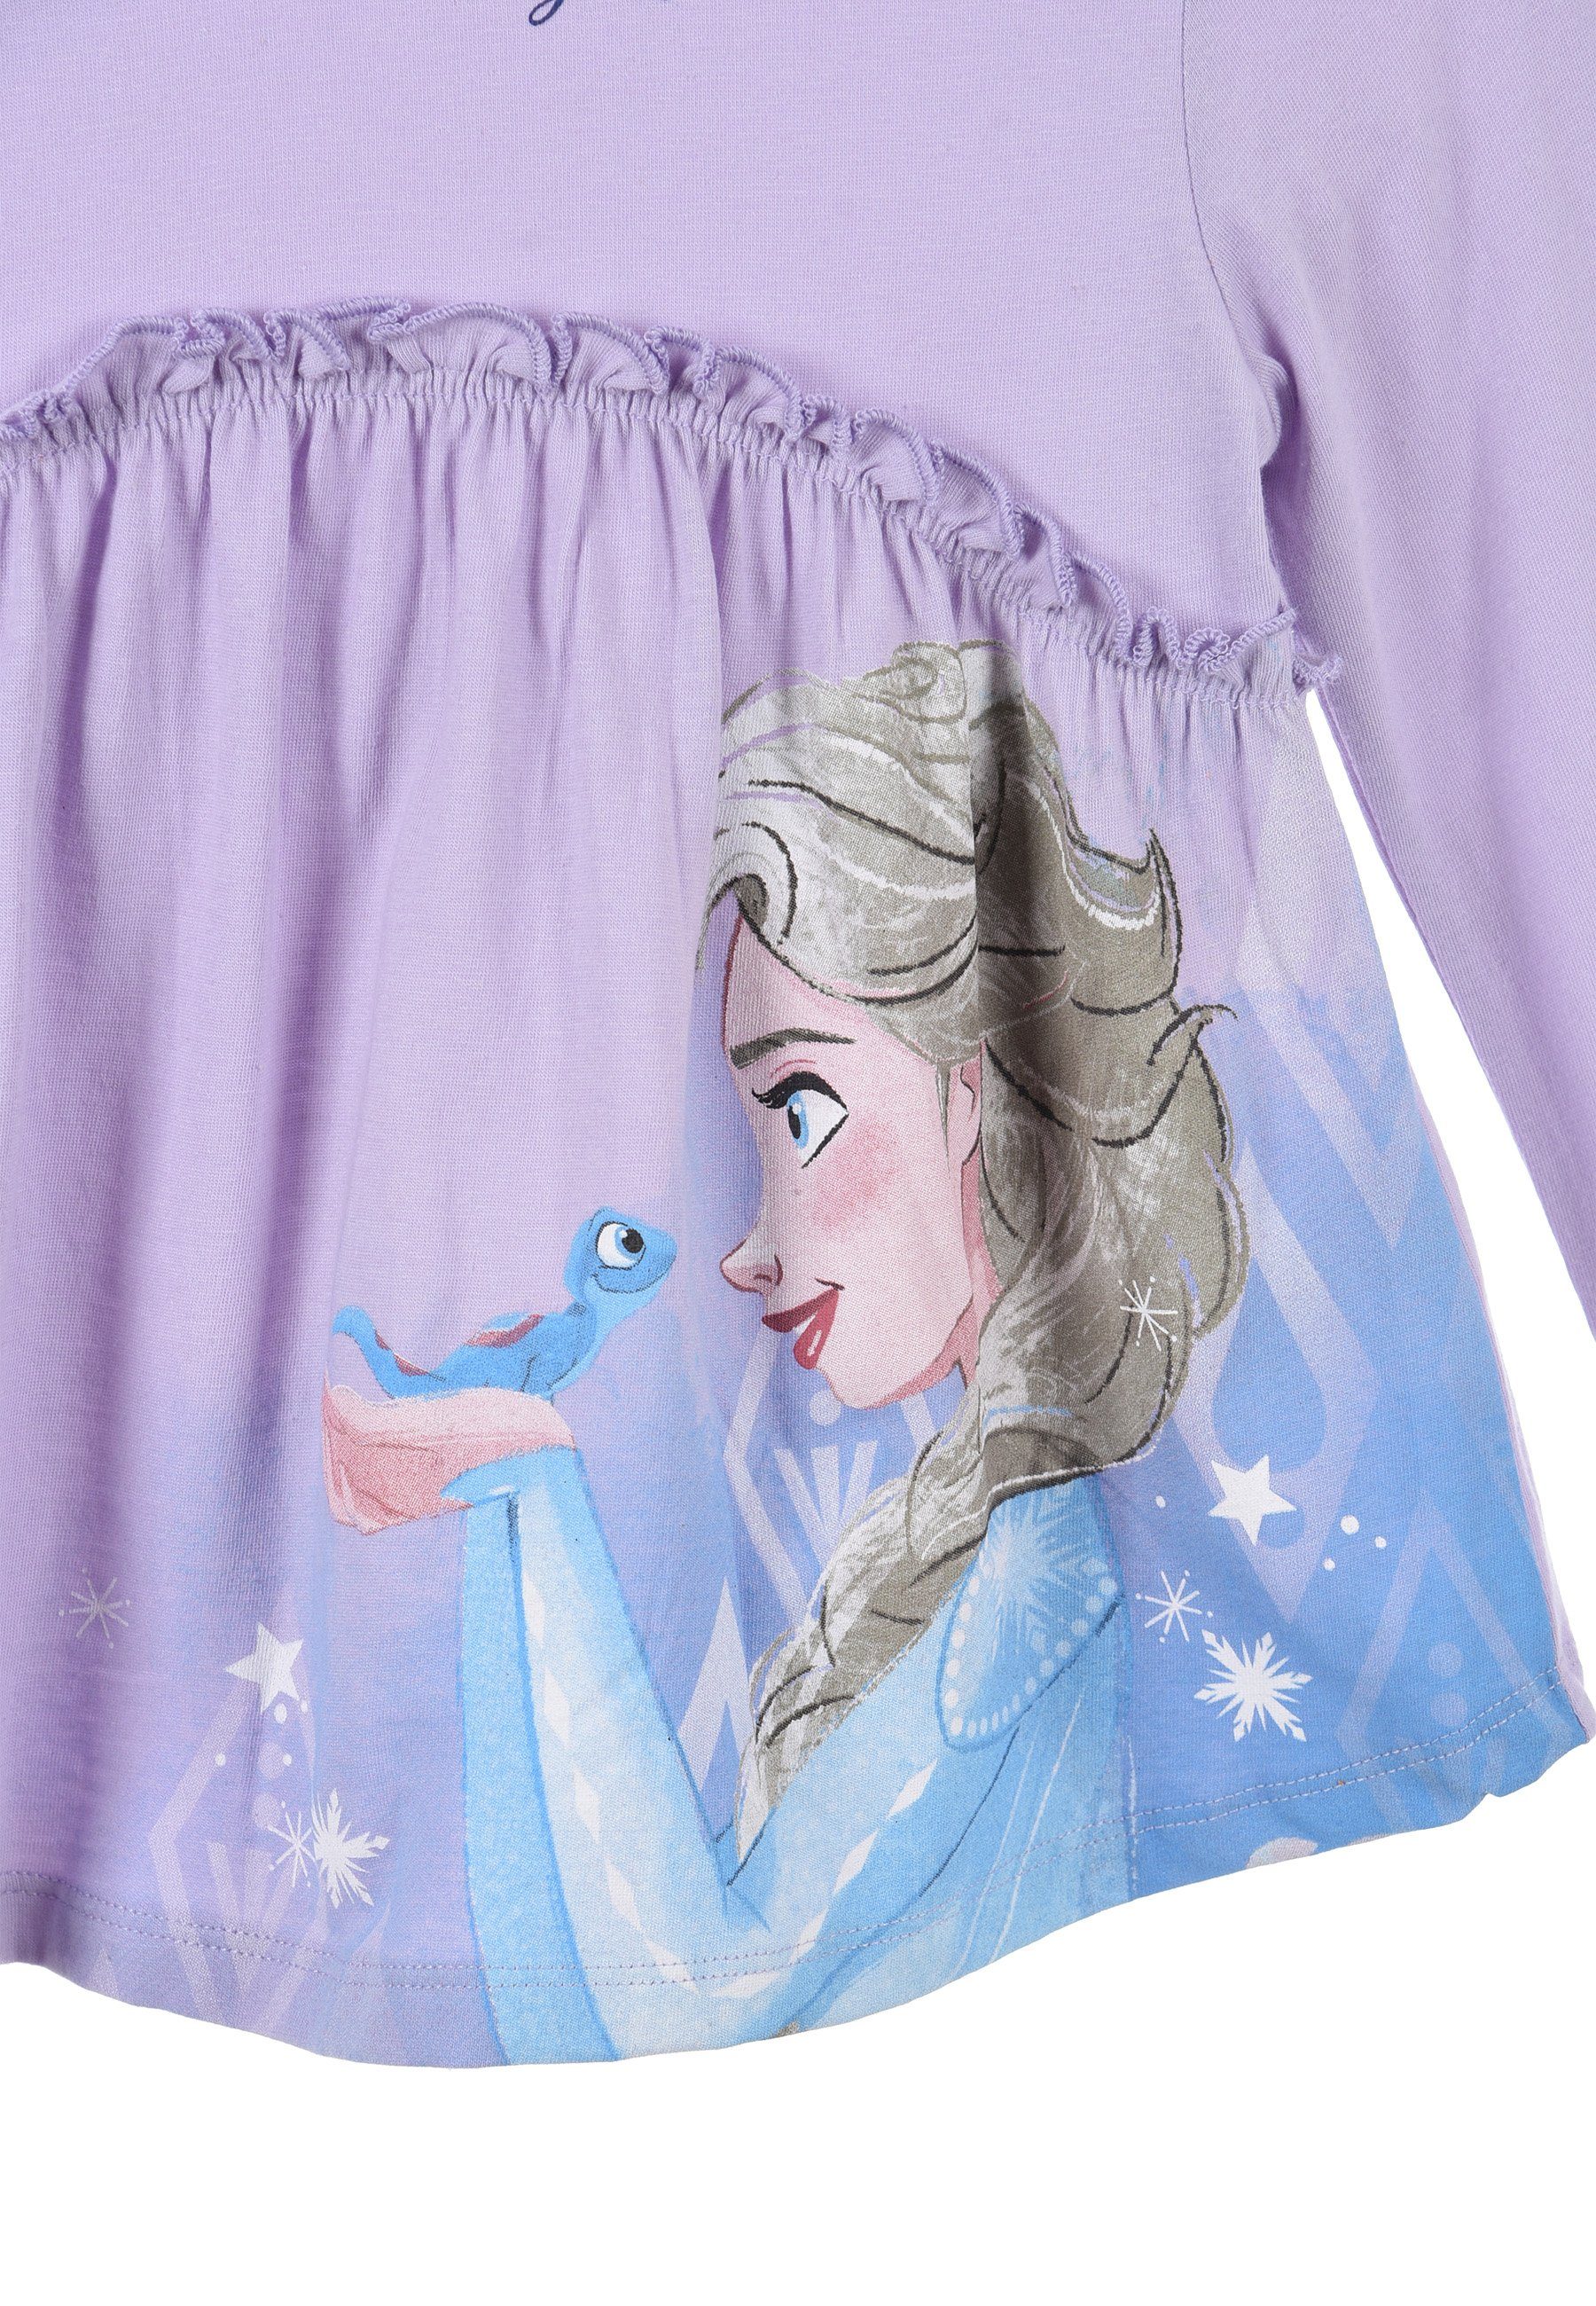 Disney Frozen Langarmshirt Eiskönigin Elsa Mädchen Die Lila Lonsleeve Langarm-Shirt